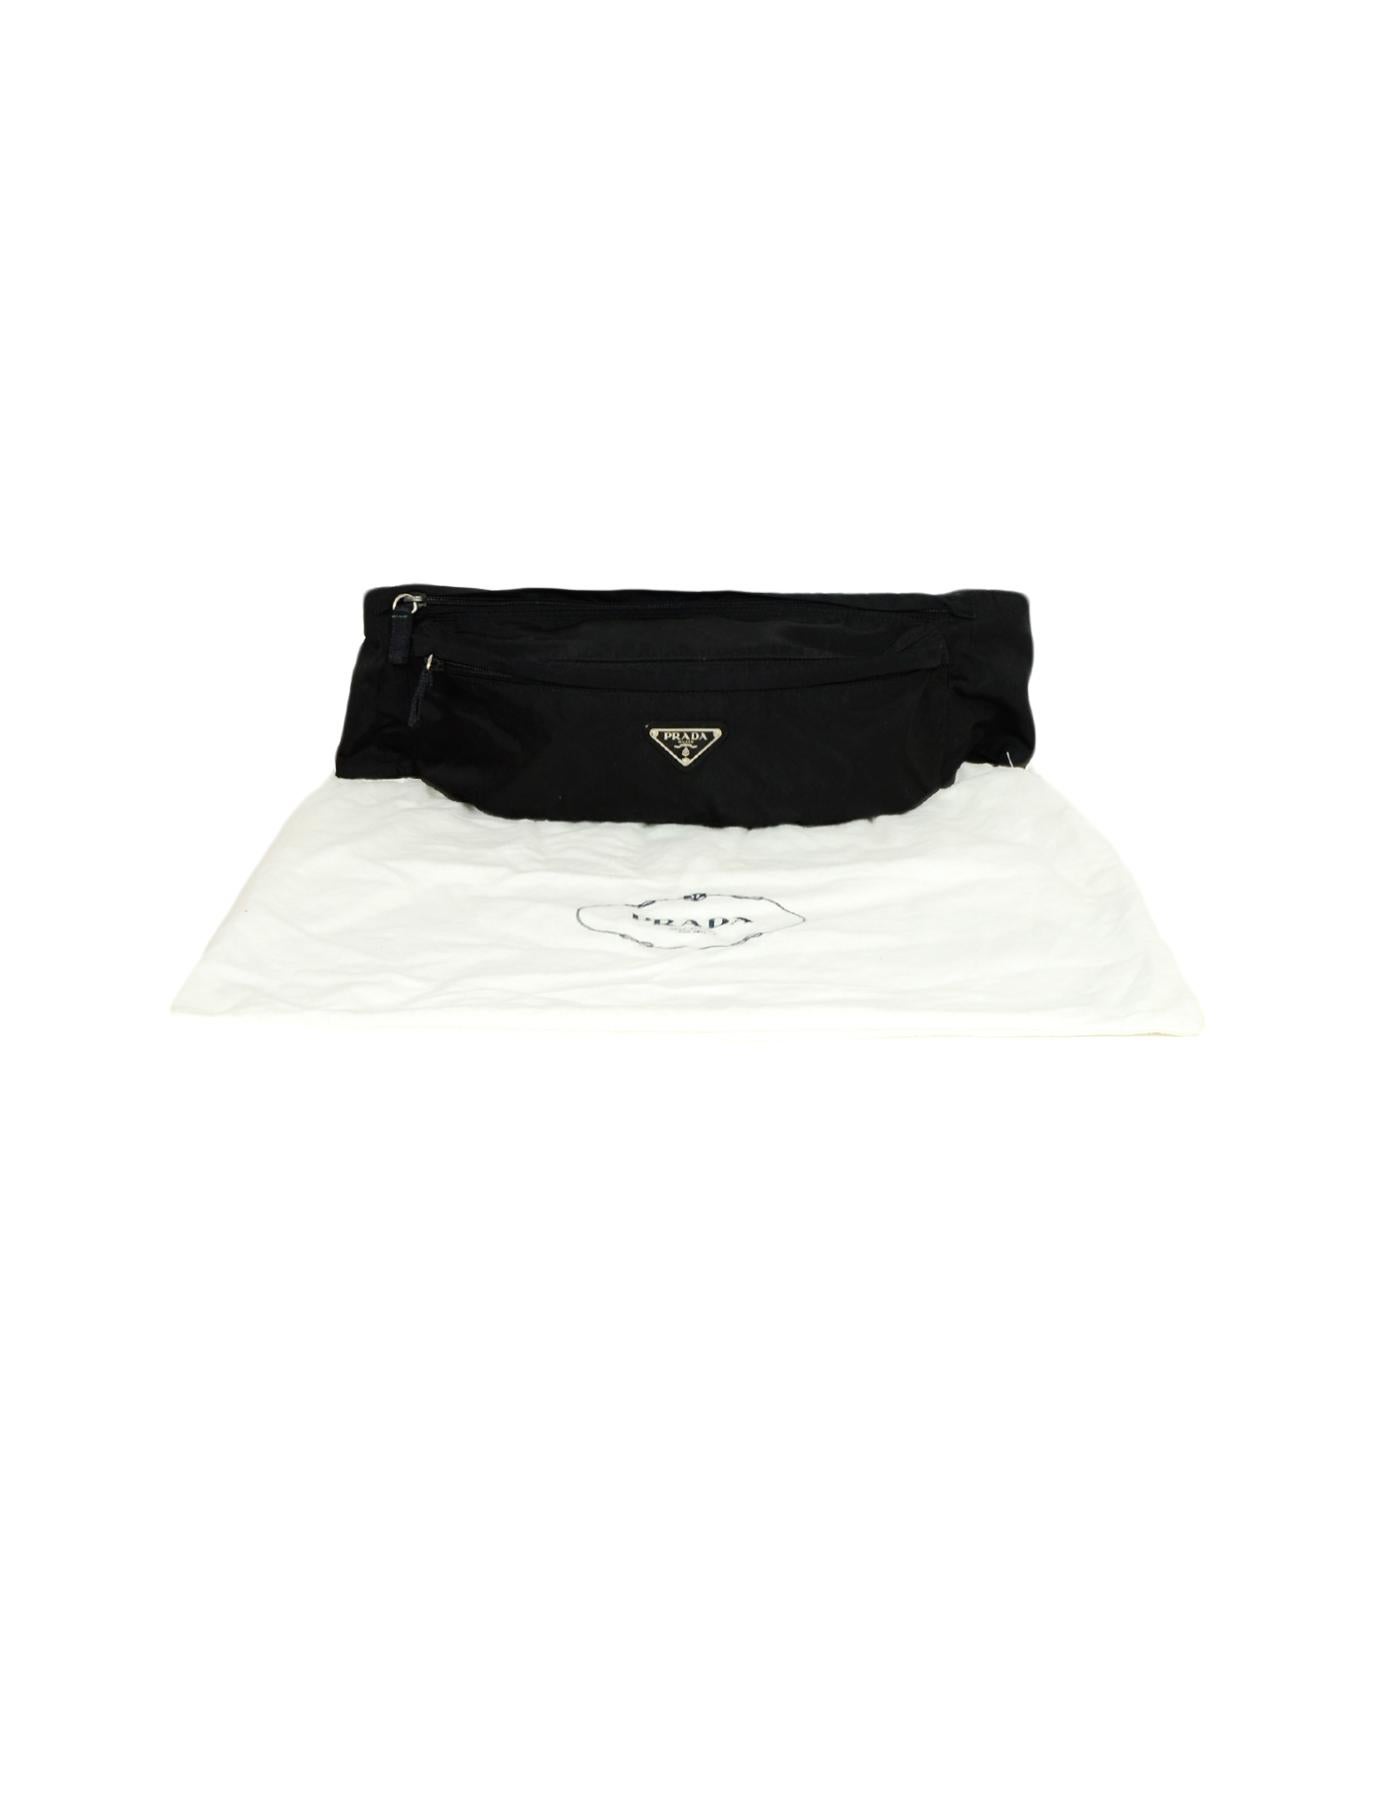 Prada Black Nylon Zip Front Waist Bag/Fanny Pack 4